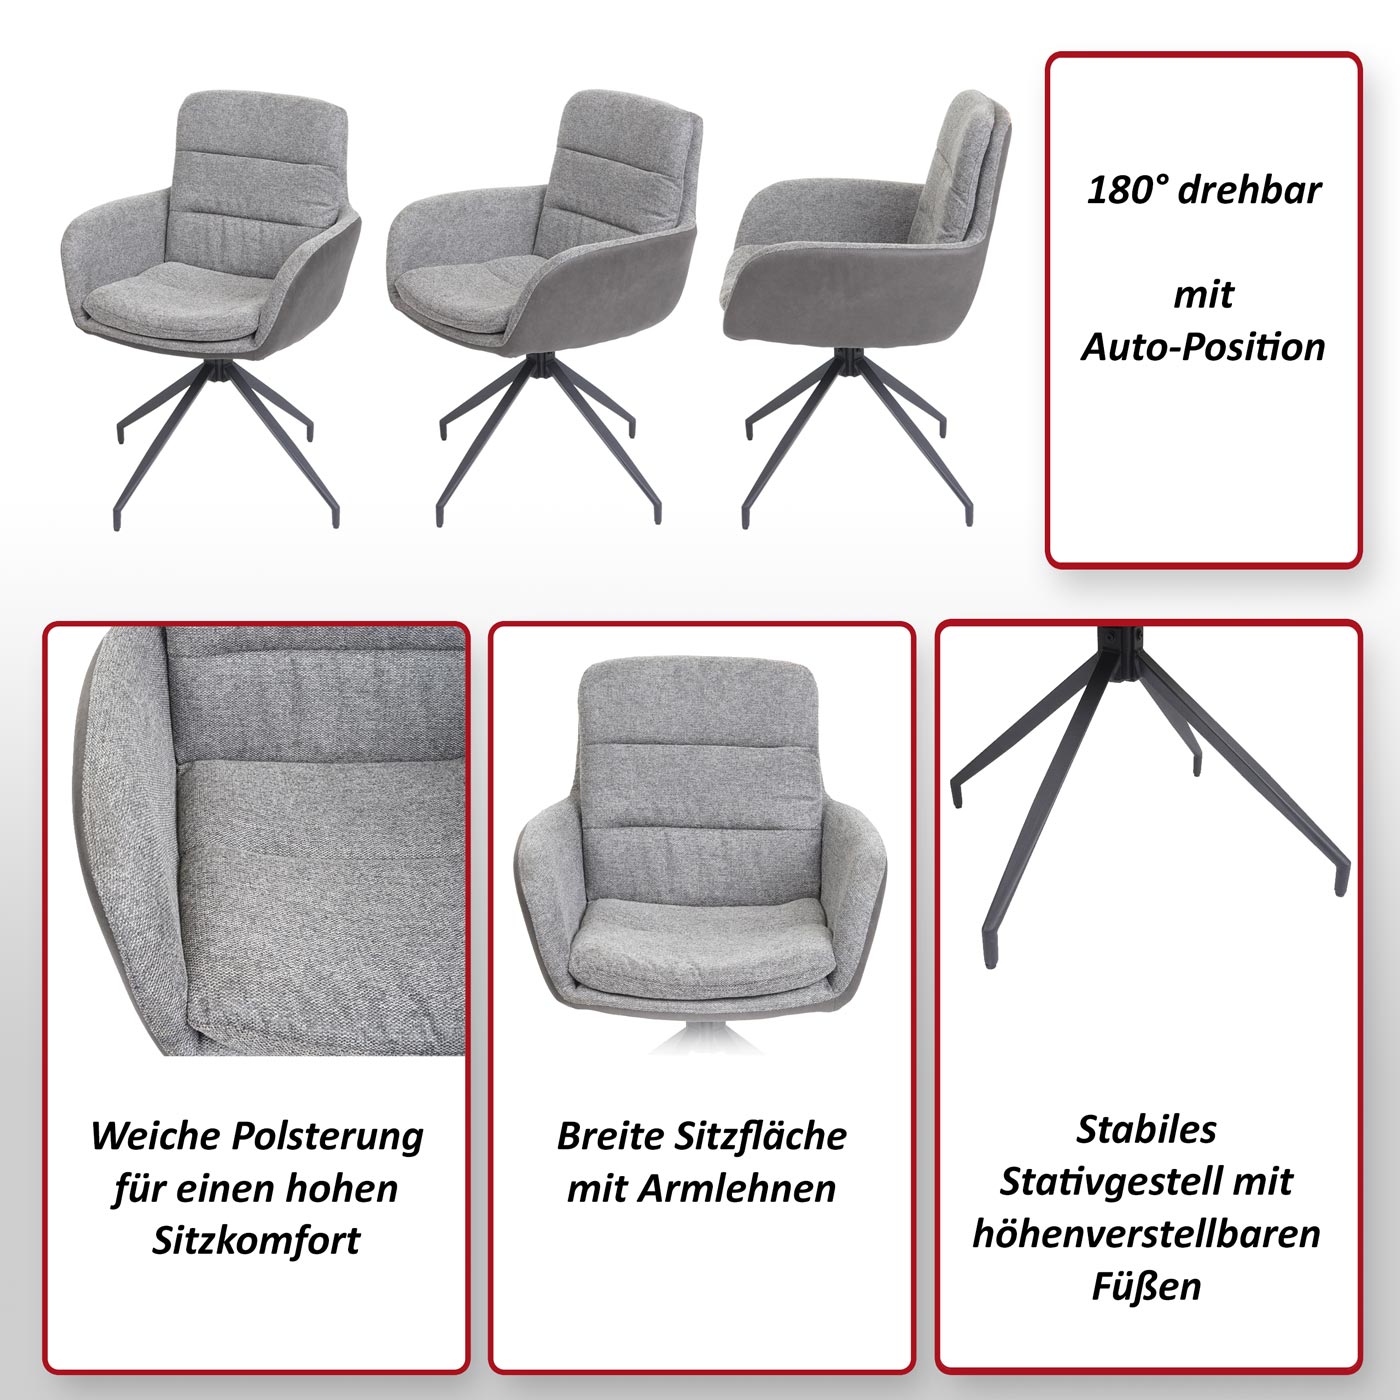 Esszimmerstuhl HWC-K32, Küchenstuhl Lehnstuhl Stuhl, drehbar Auto-Position,  Stoff/Textil - grau-dunkelgrau | Swisshandel24